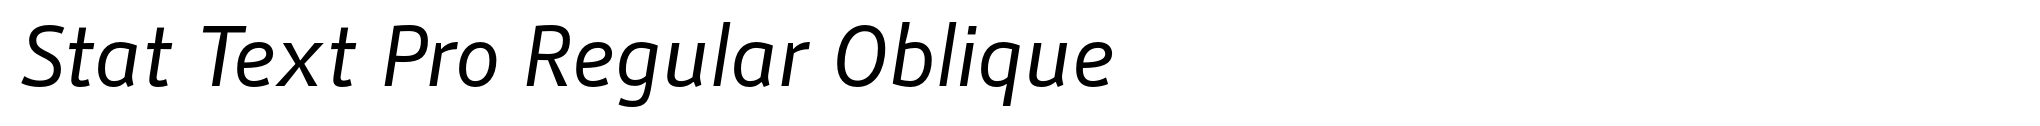 Stat Text Pro Regular Oblique image